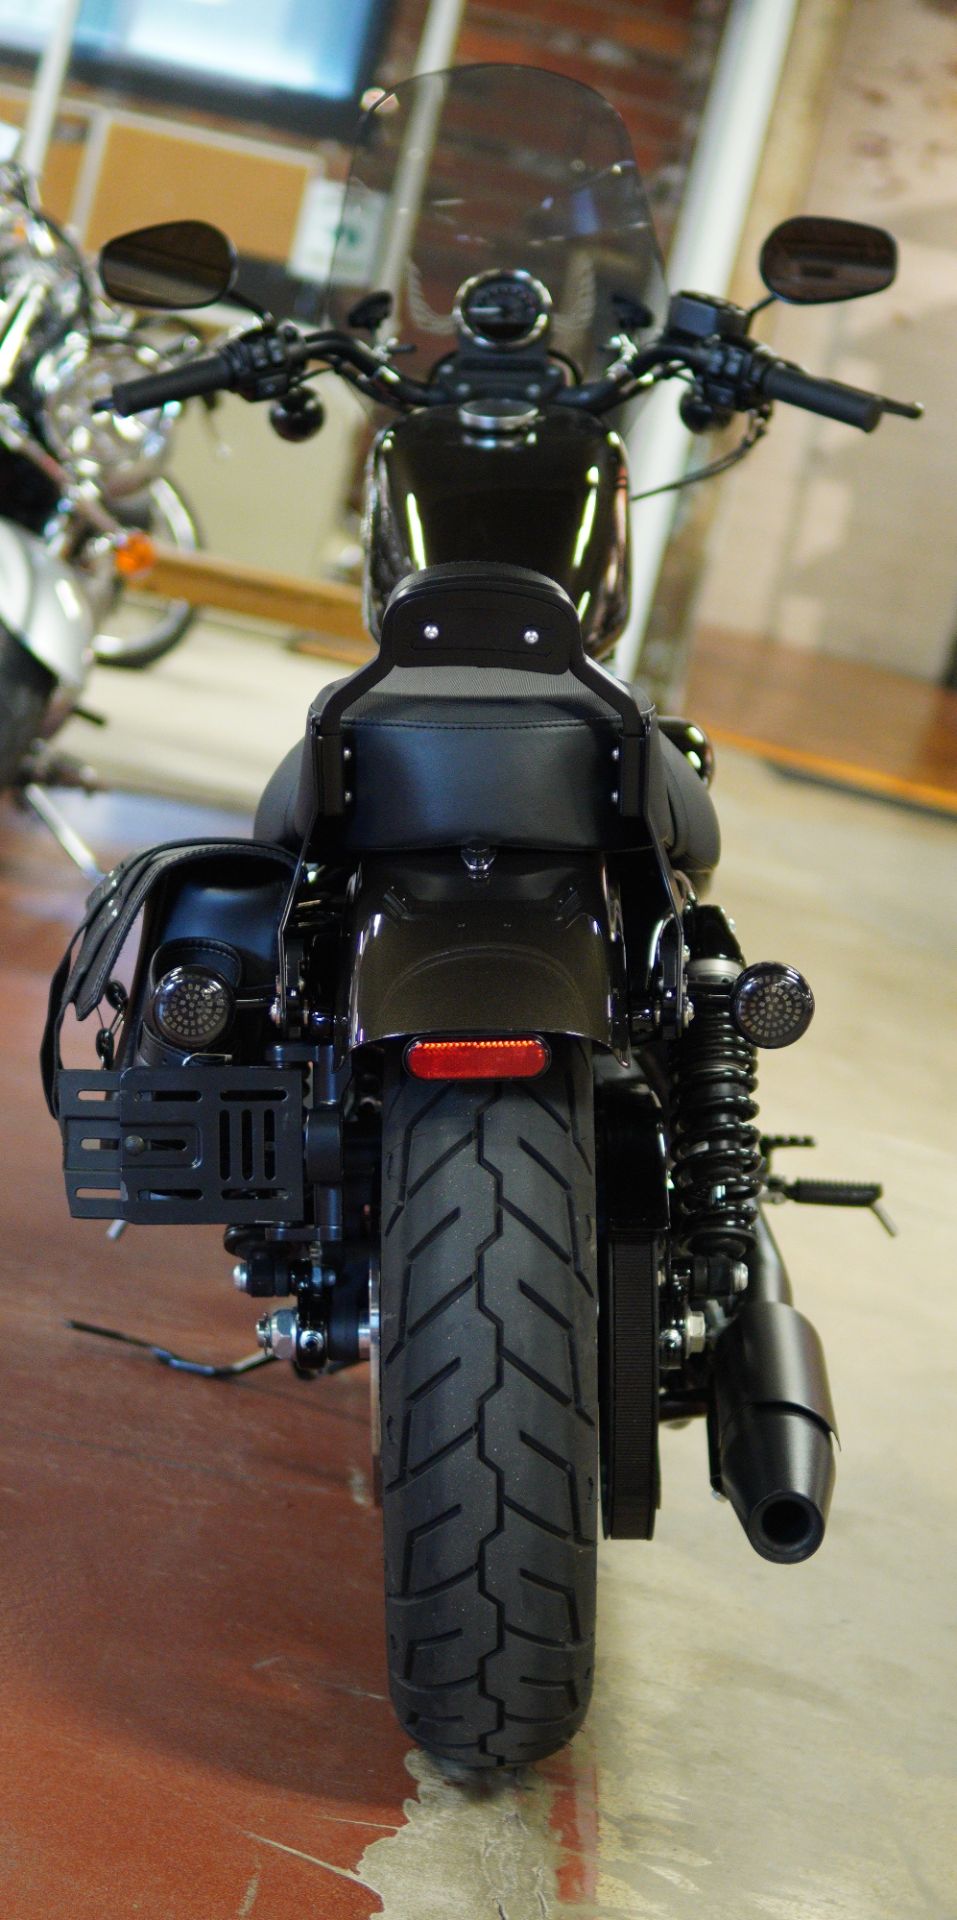 2020 Harley-Davidson Iron 883™ in New London, Connecticut - Photo 7